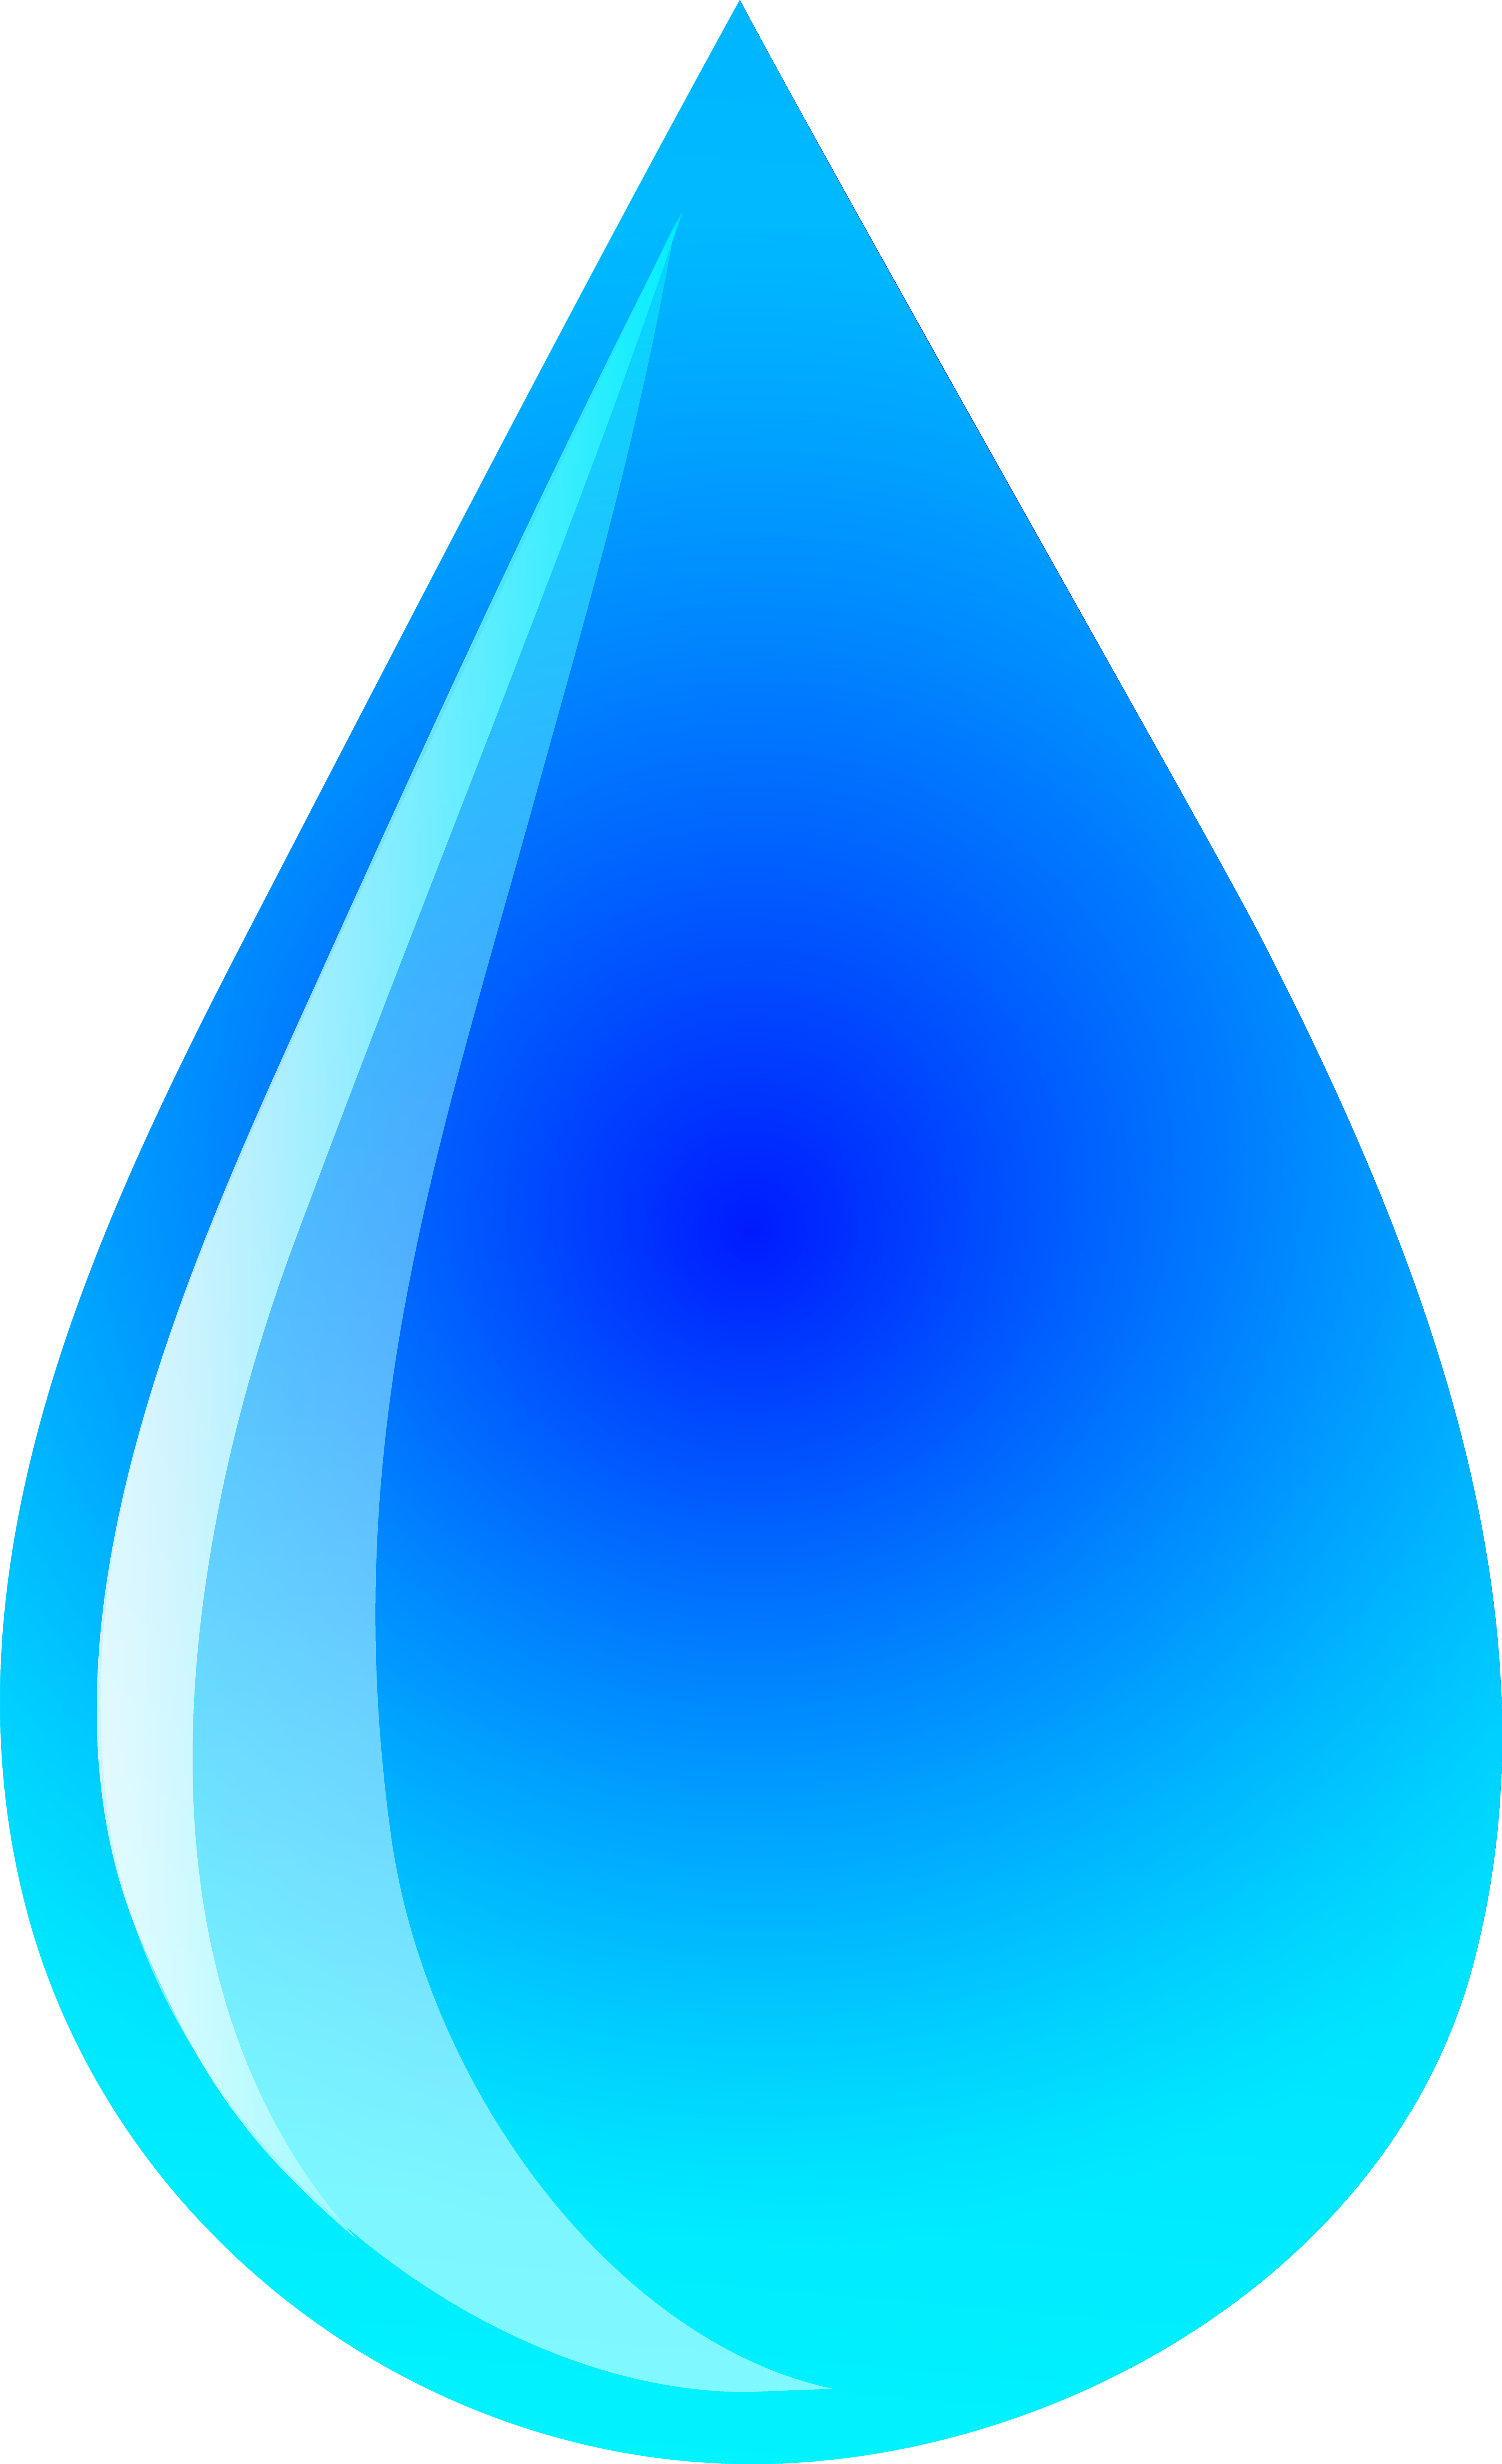 Blue Water Droplet Logo - Free Clip Art